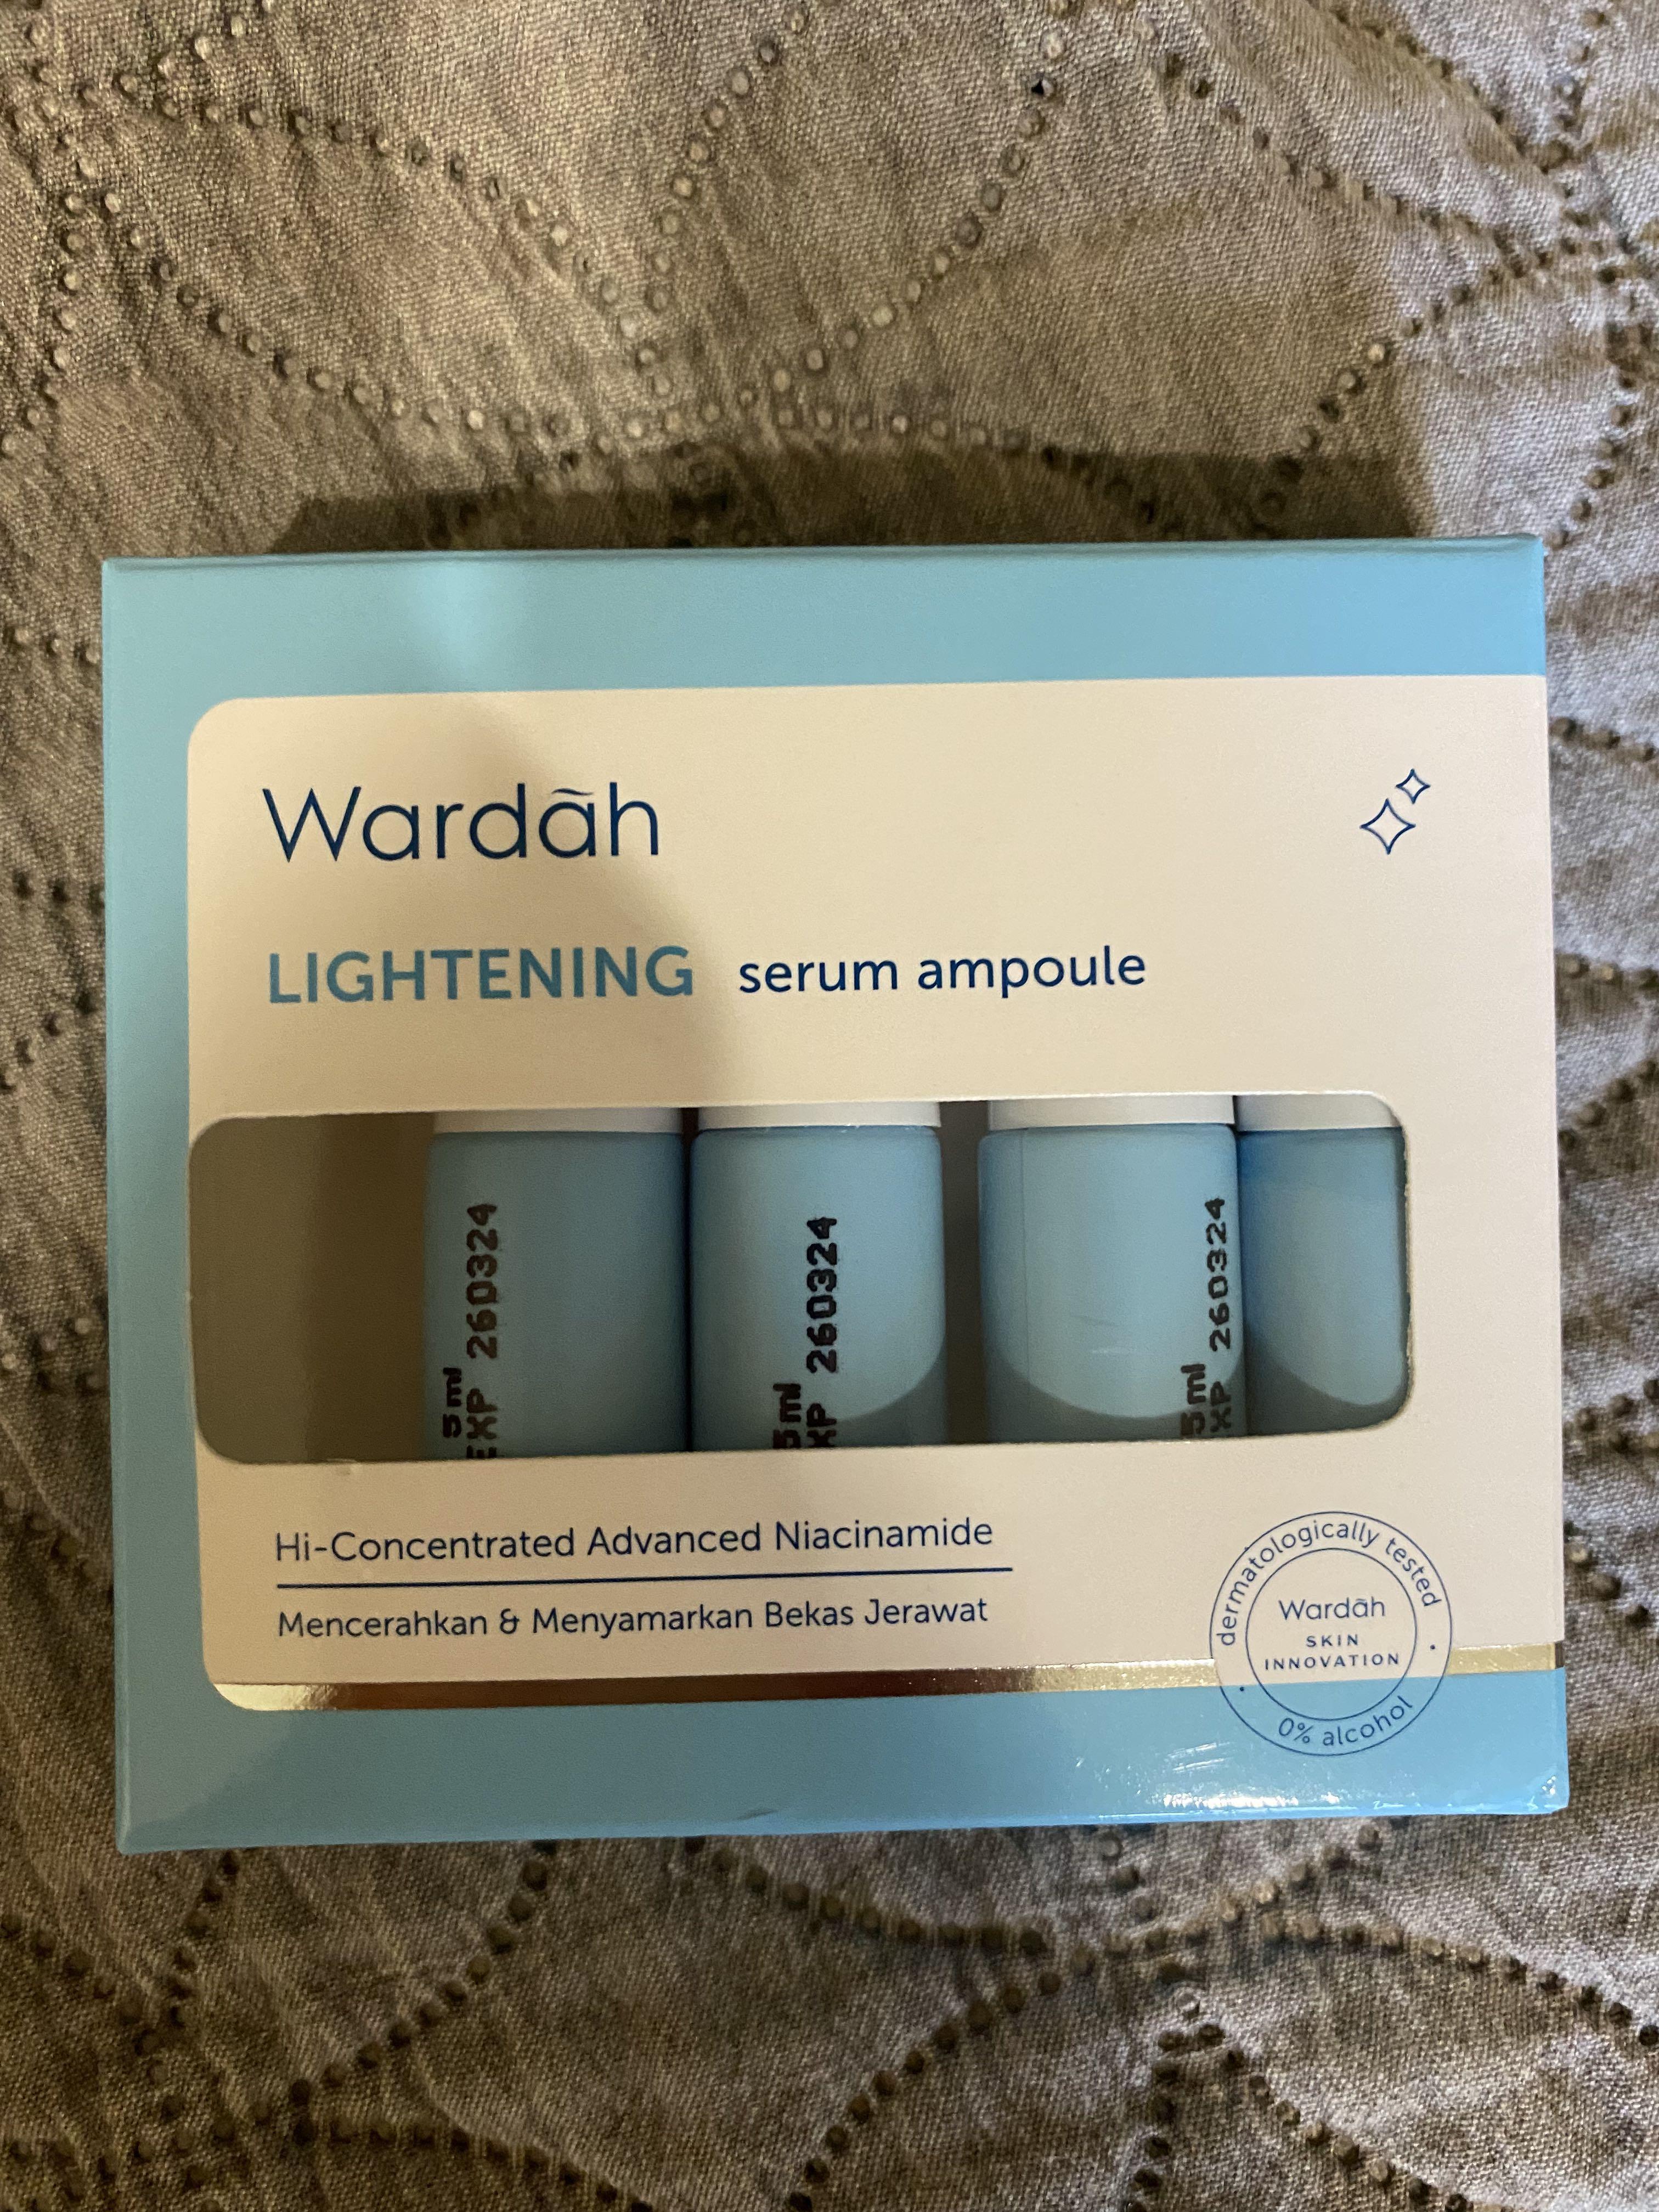 Serum ampoule lightening wardah Kegunaan Wardah